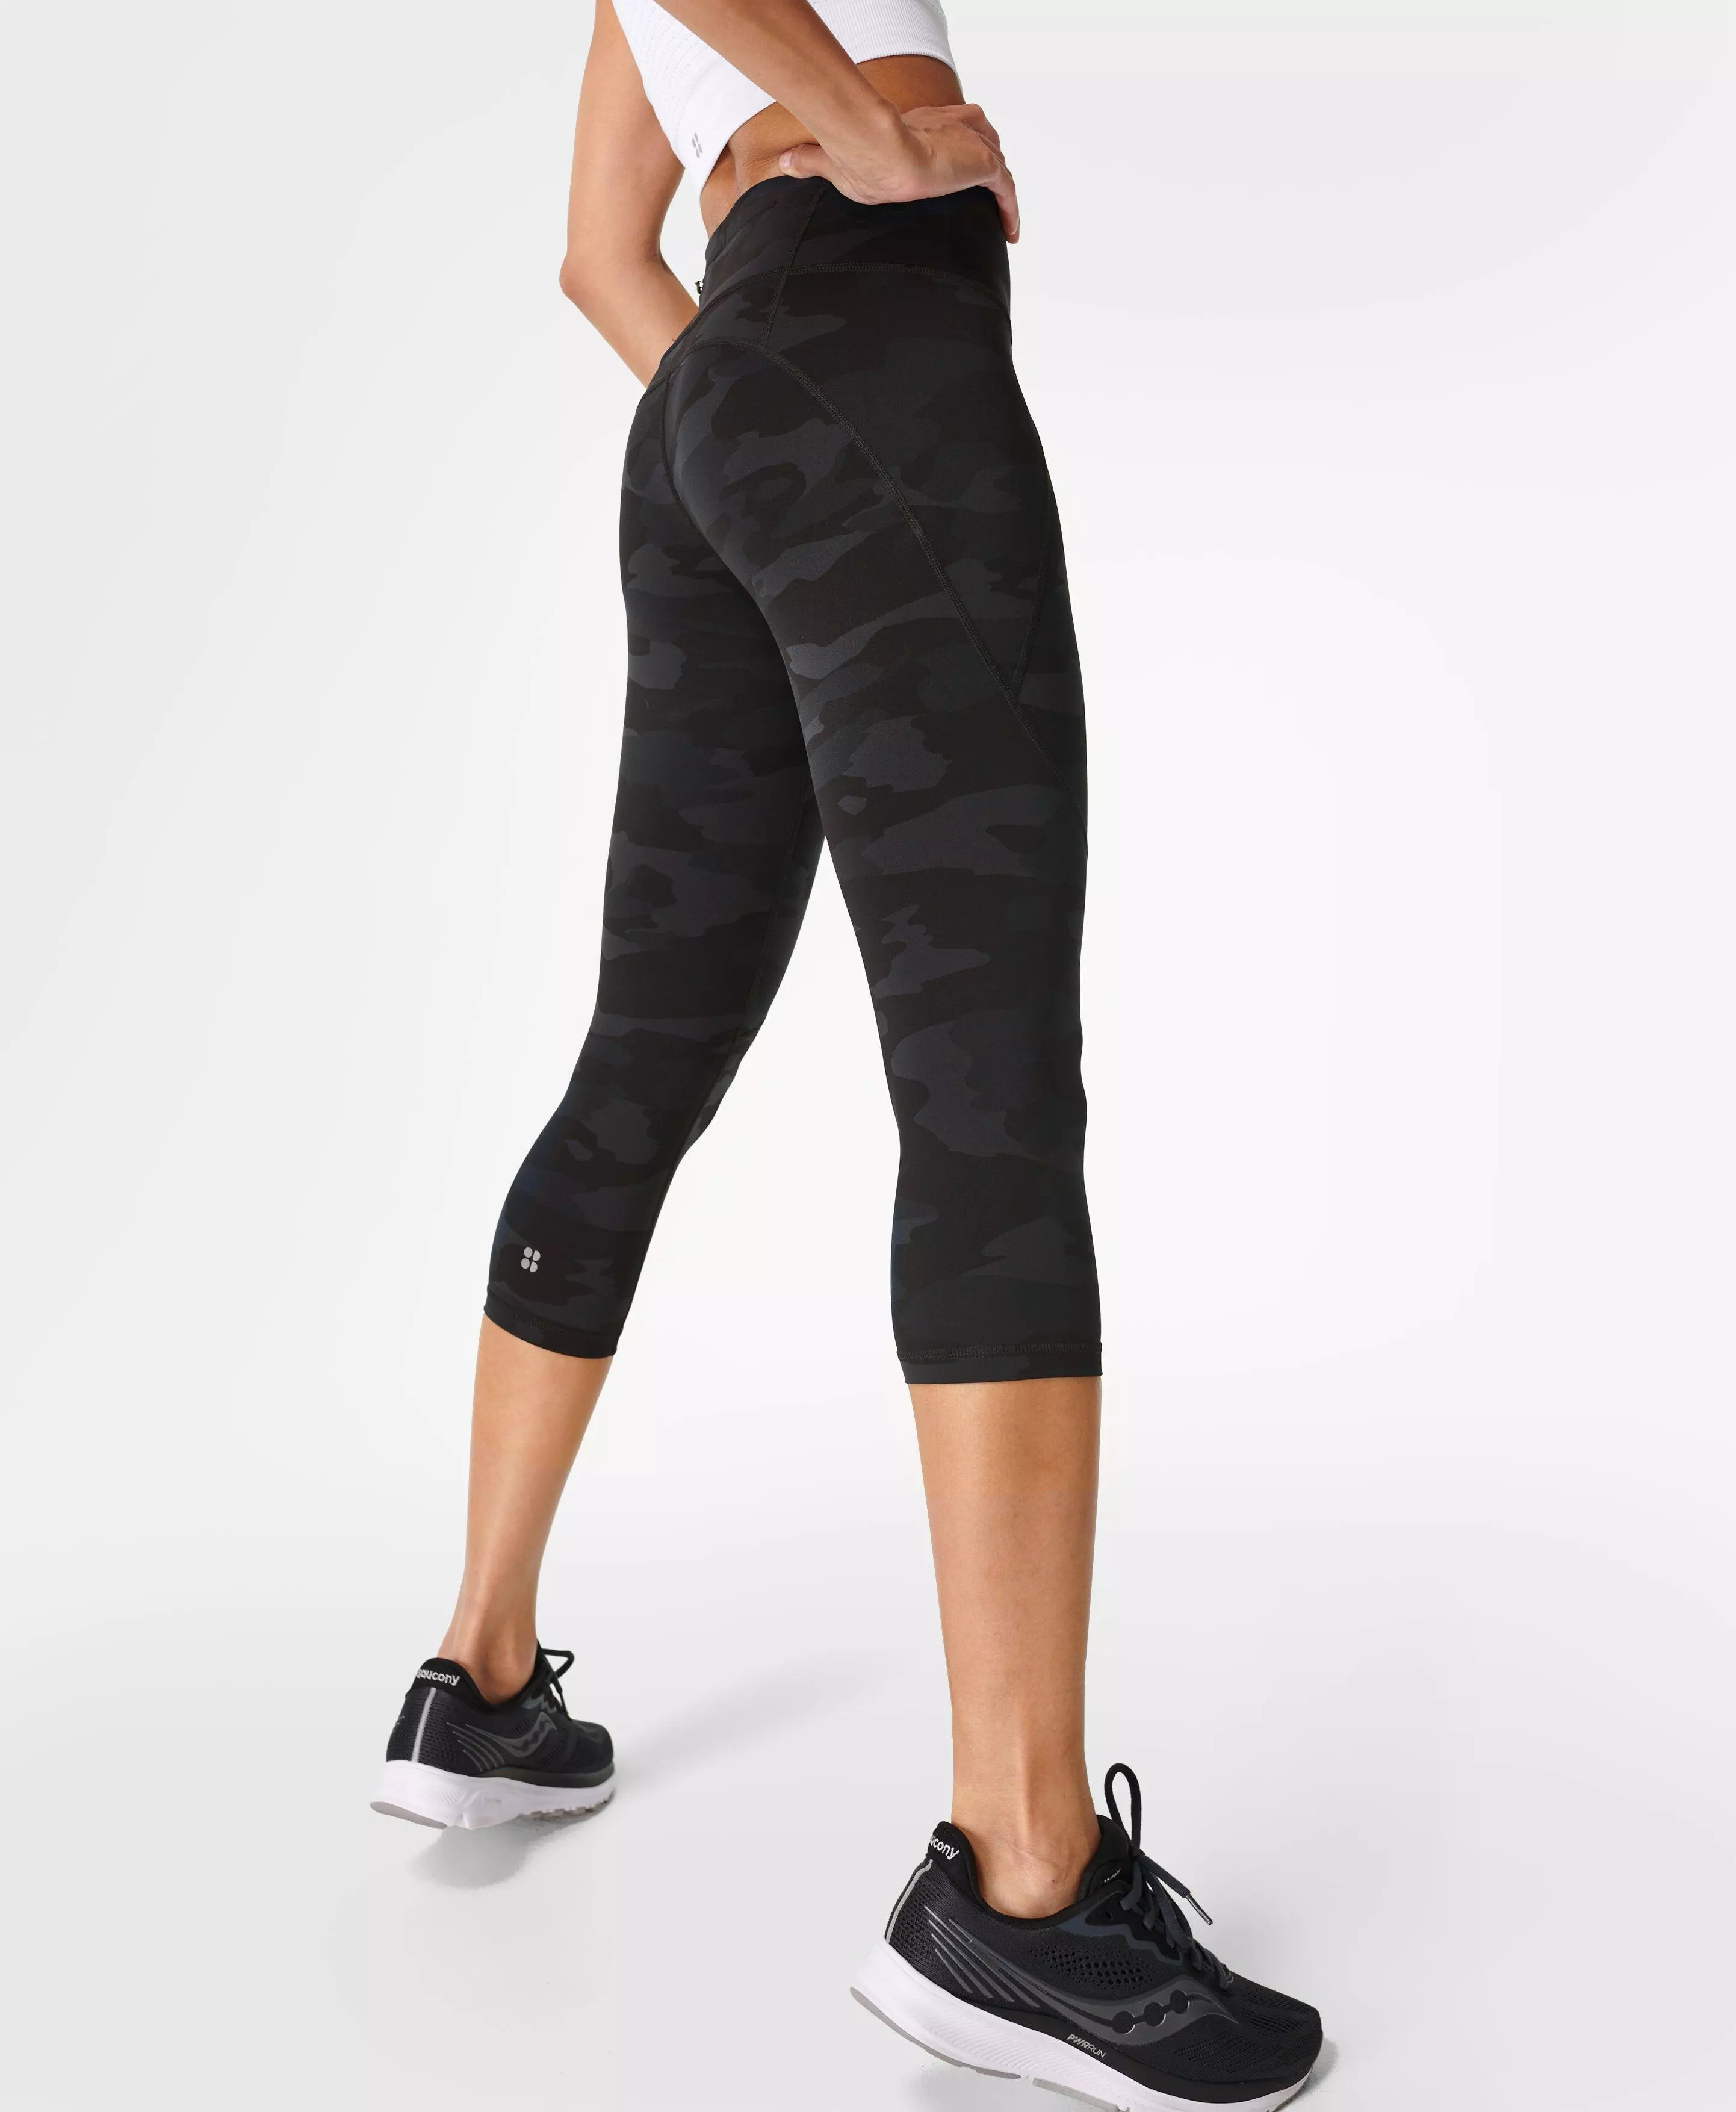 Pockets For Women - Sweaty Betty Power Cropped Gym Leggings, Multi Colored,  Women's